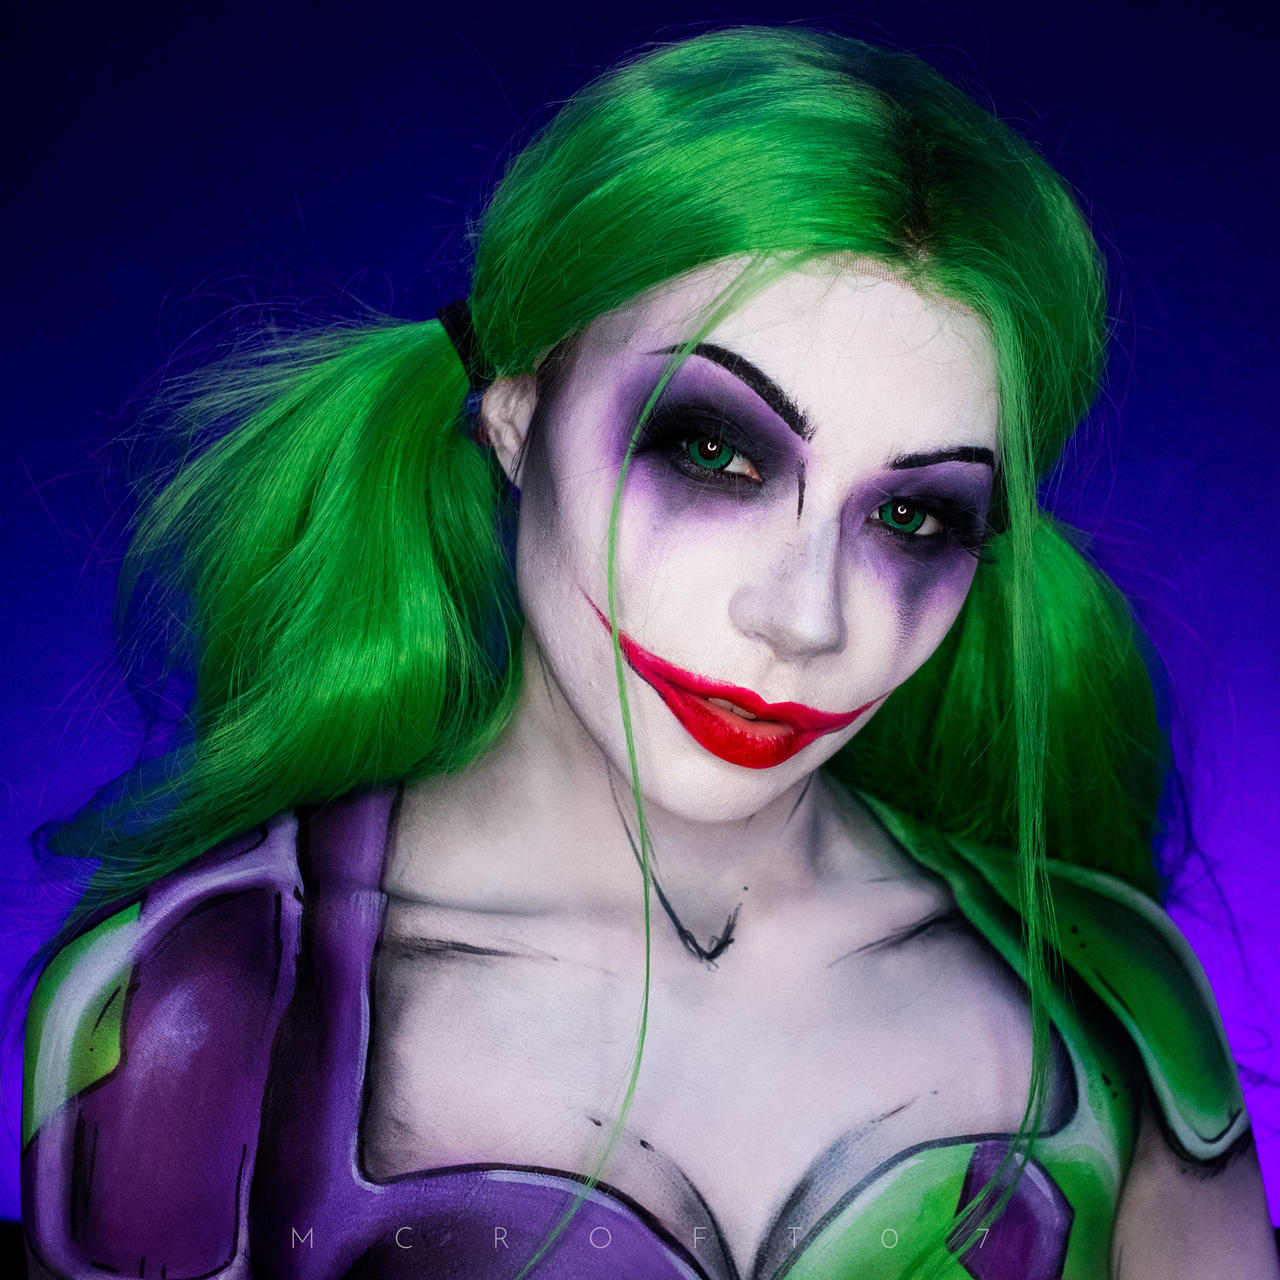 Harley Joker Mashup Inspired by Elias-Chatzoudis by mcroft07 on DeviantArt